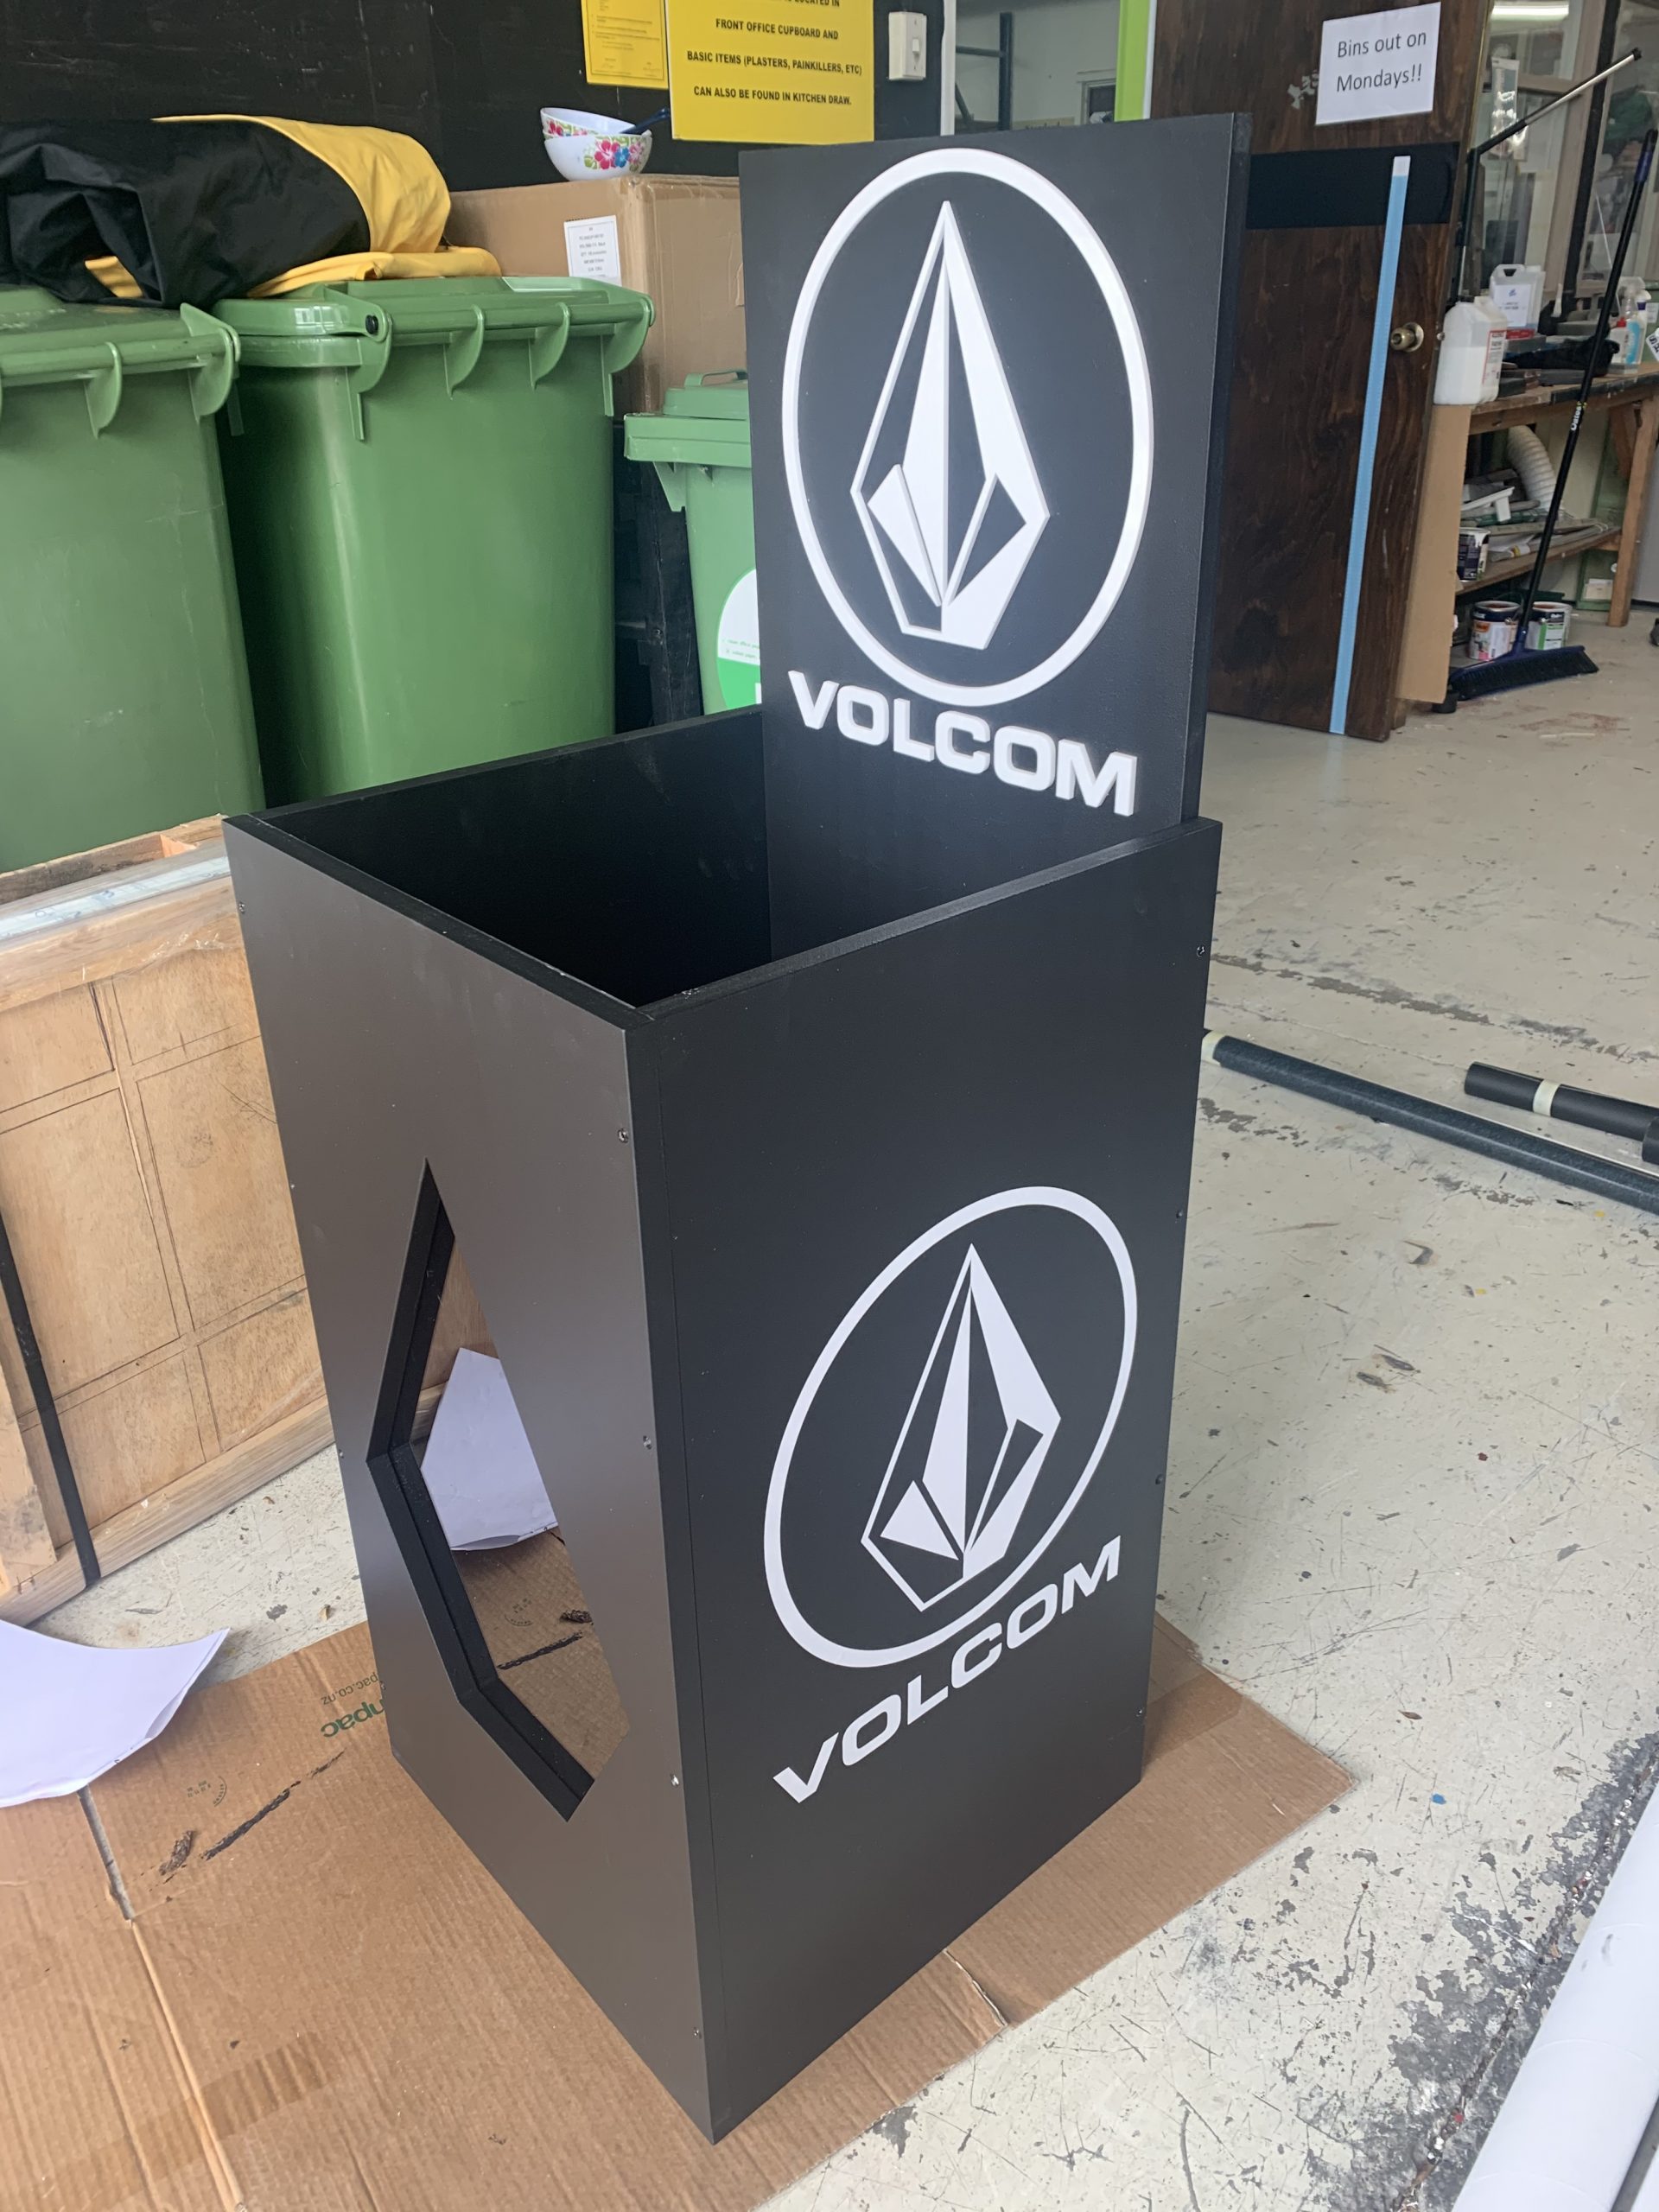 Icon Print - Volcom